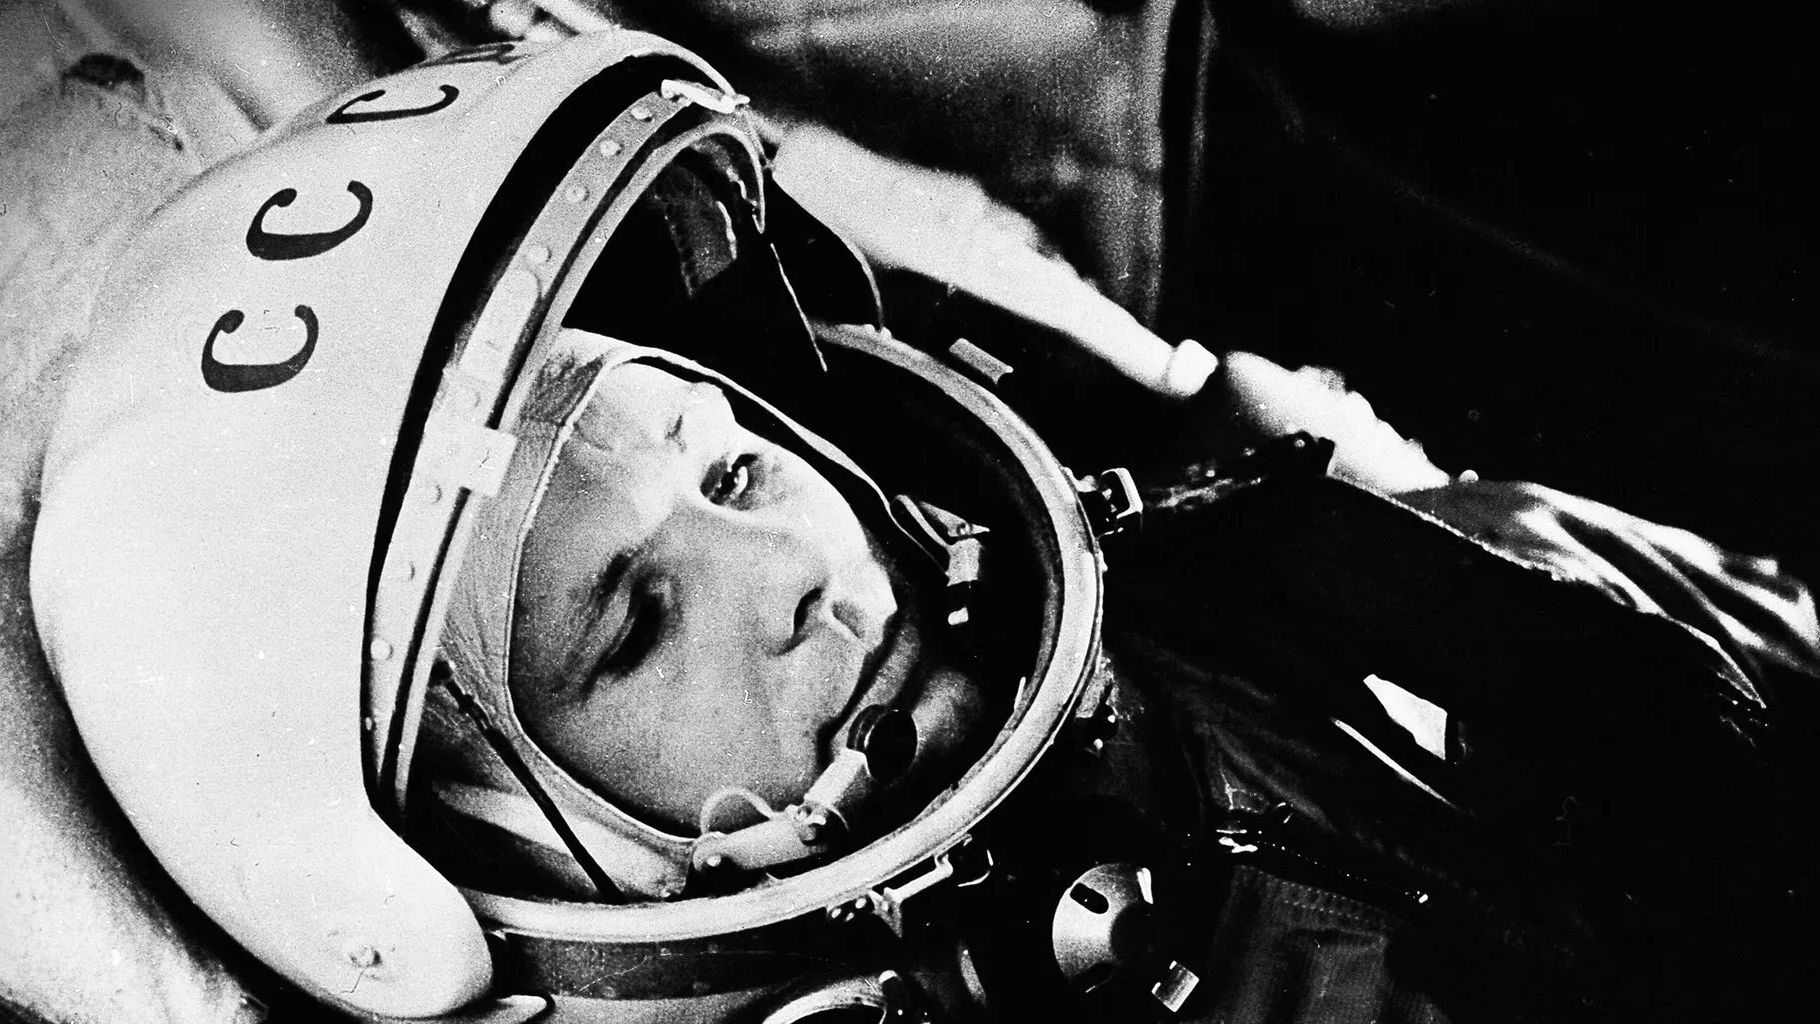 From Sputnik-1 to Sputnik V: Russian scientific achievements